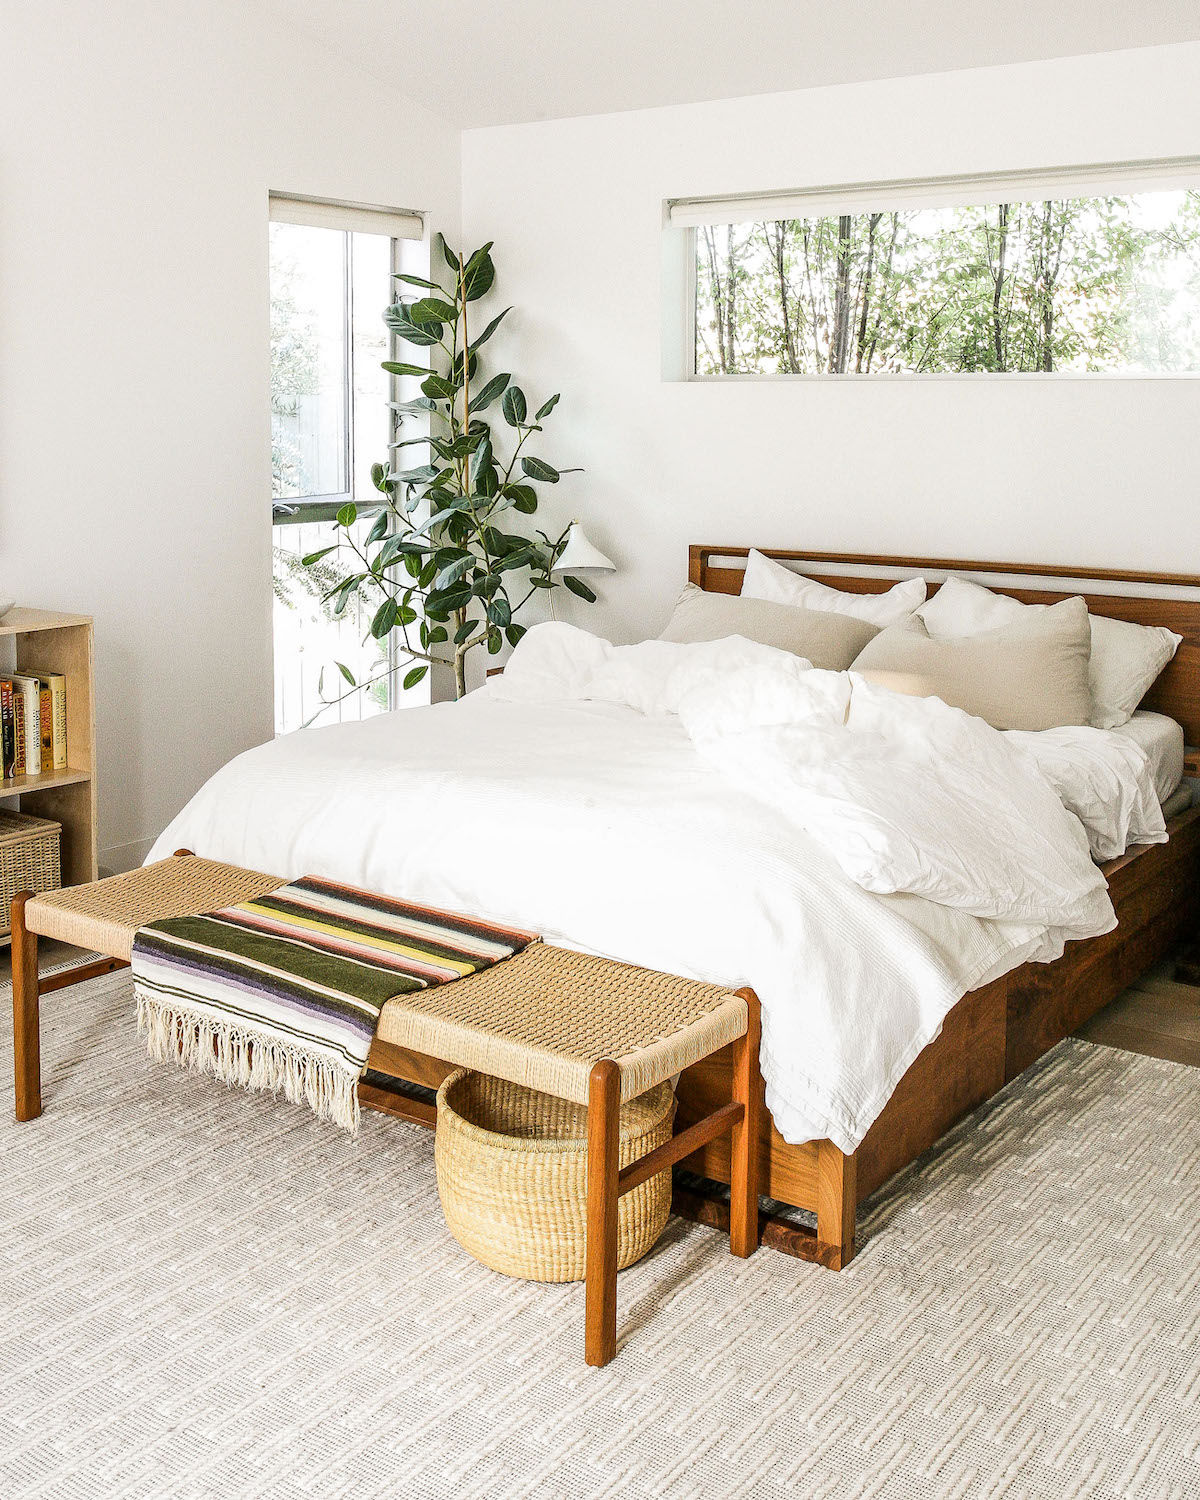 Fiddle Leaf Fig Tree in corner of minimalist bedroom with wood furniture